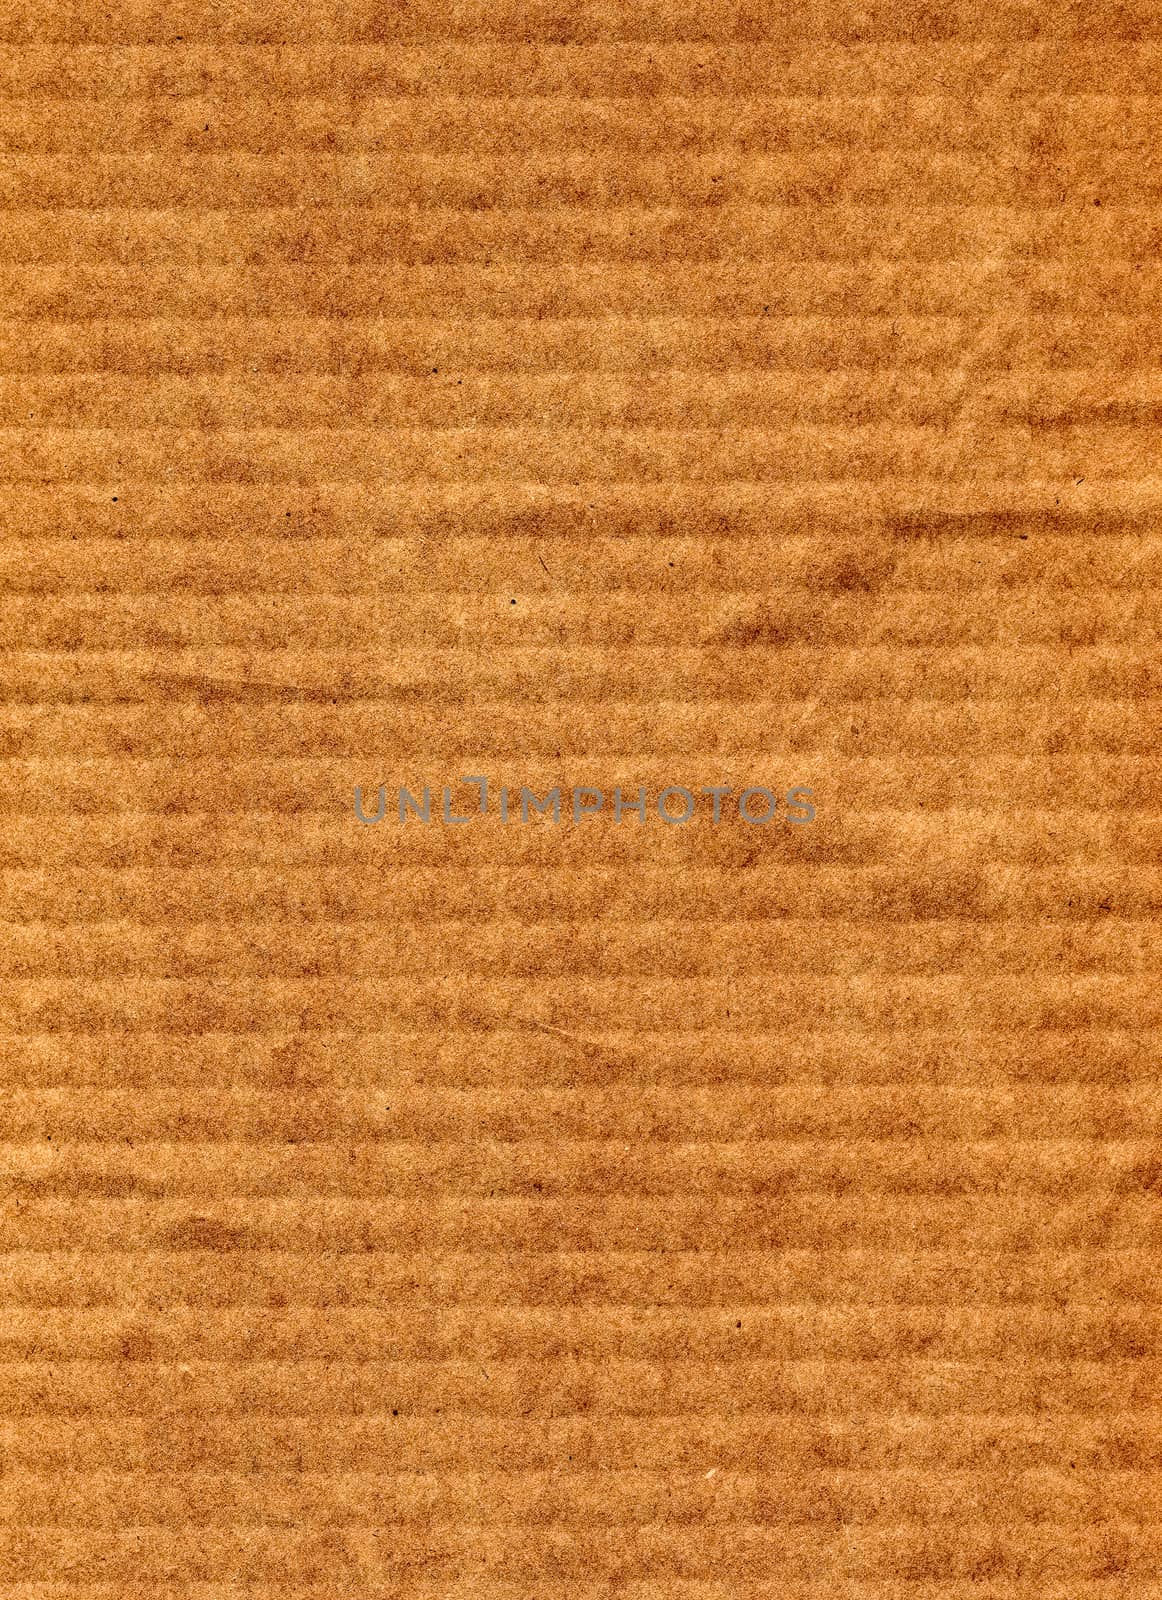 Brown corrugated cardboard background by claudiodivizia